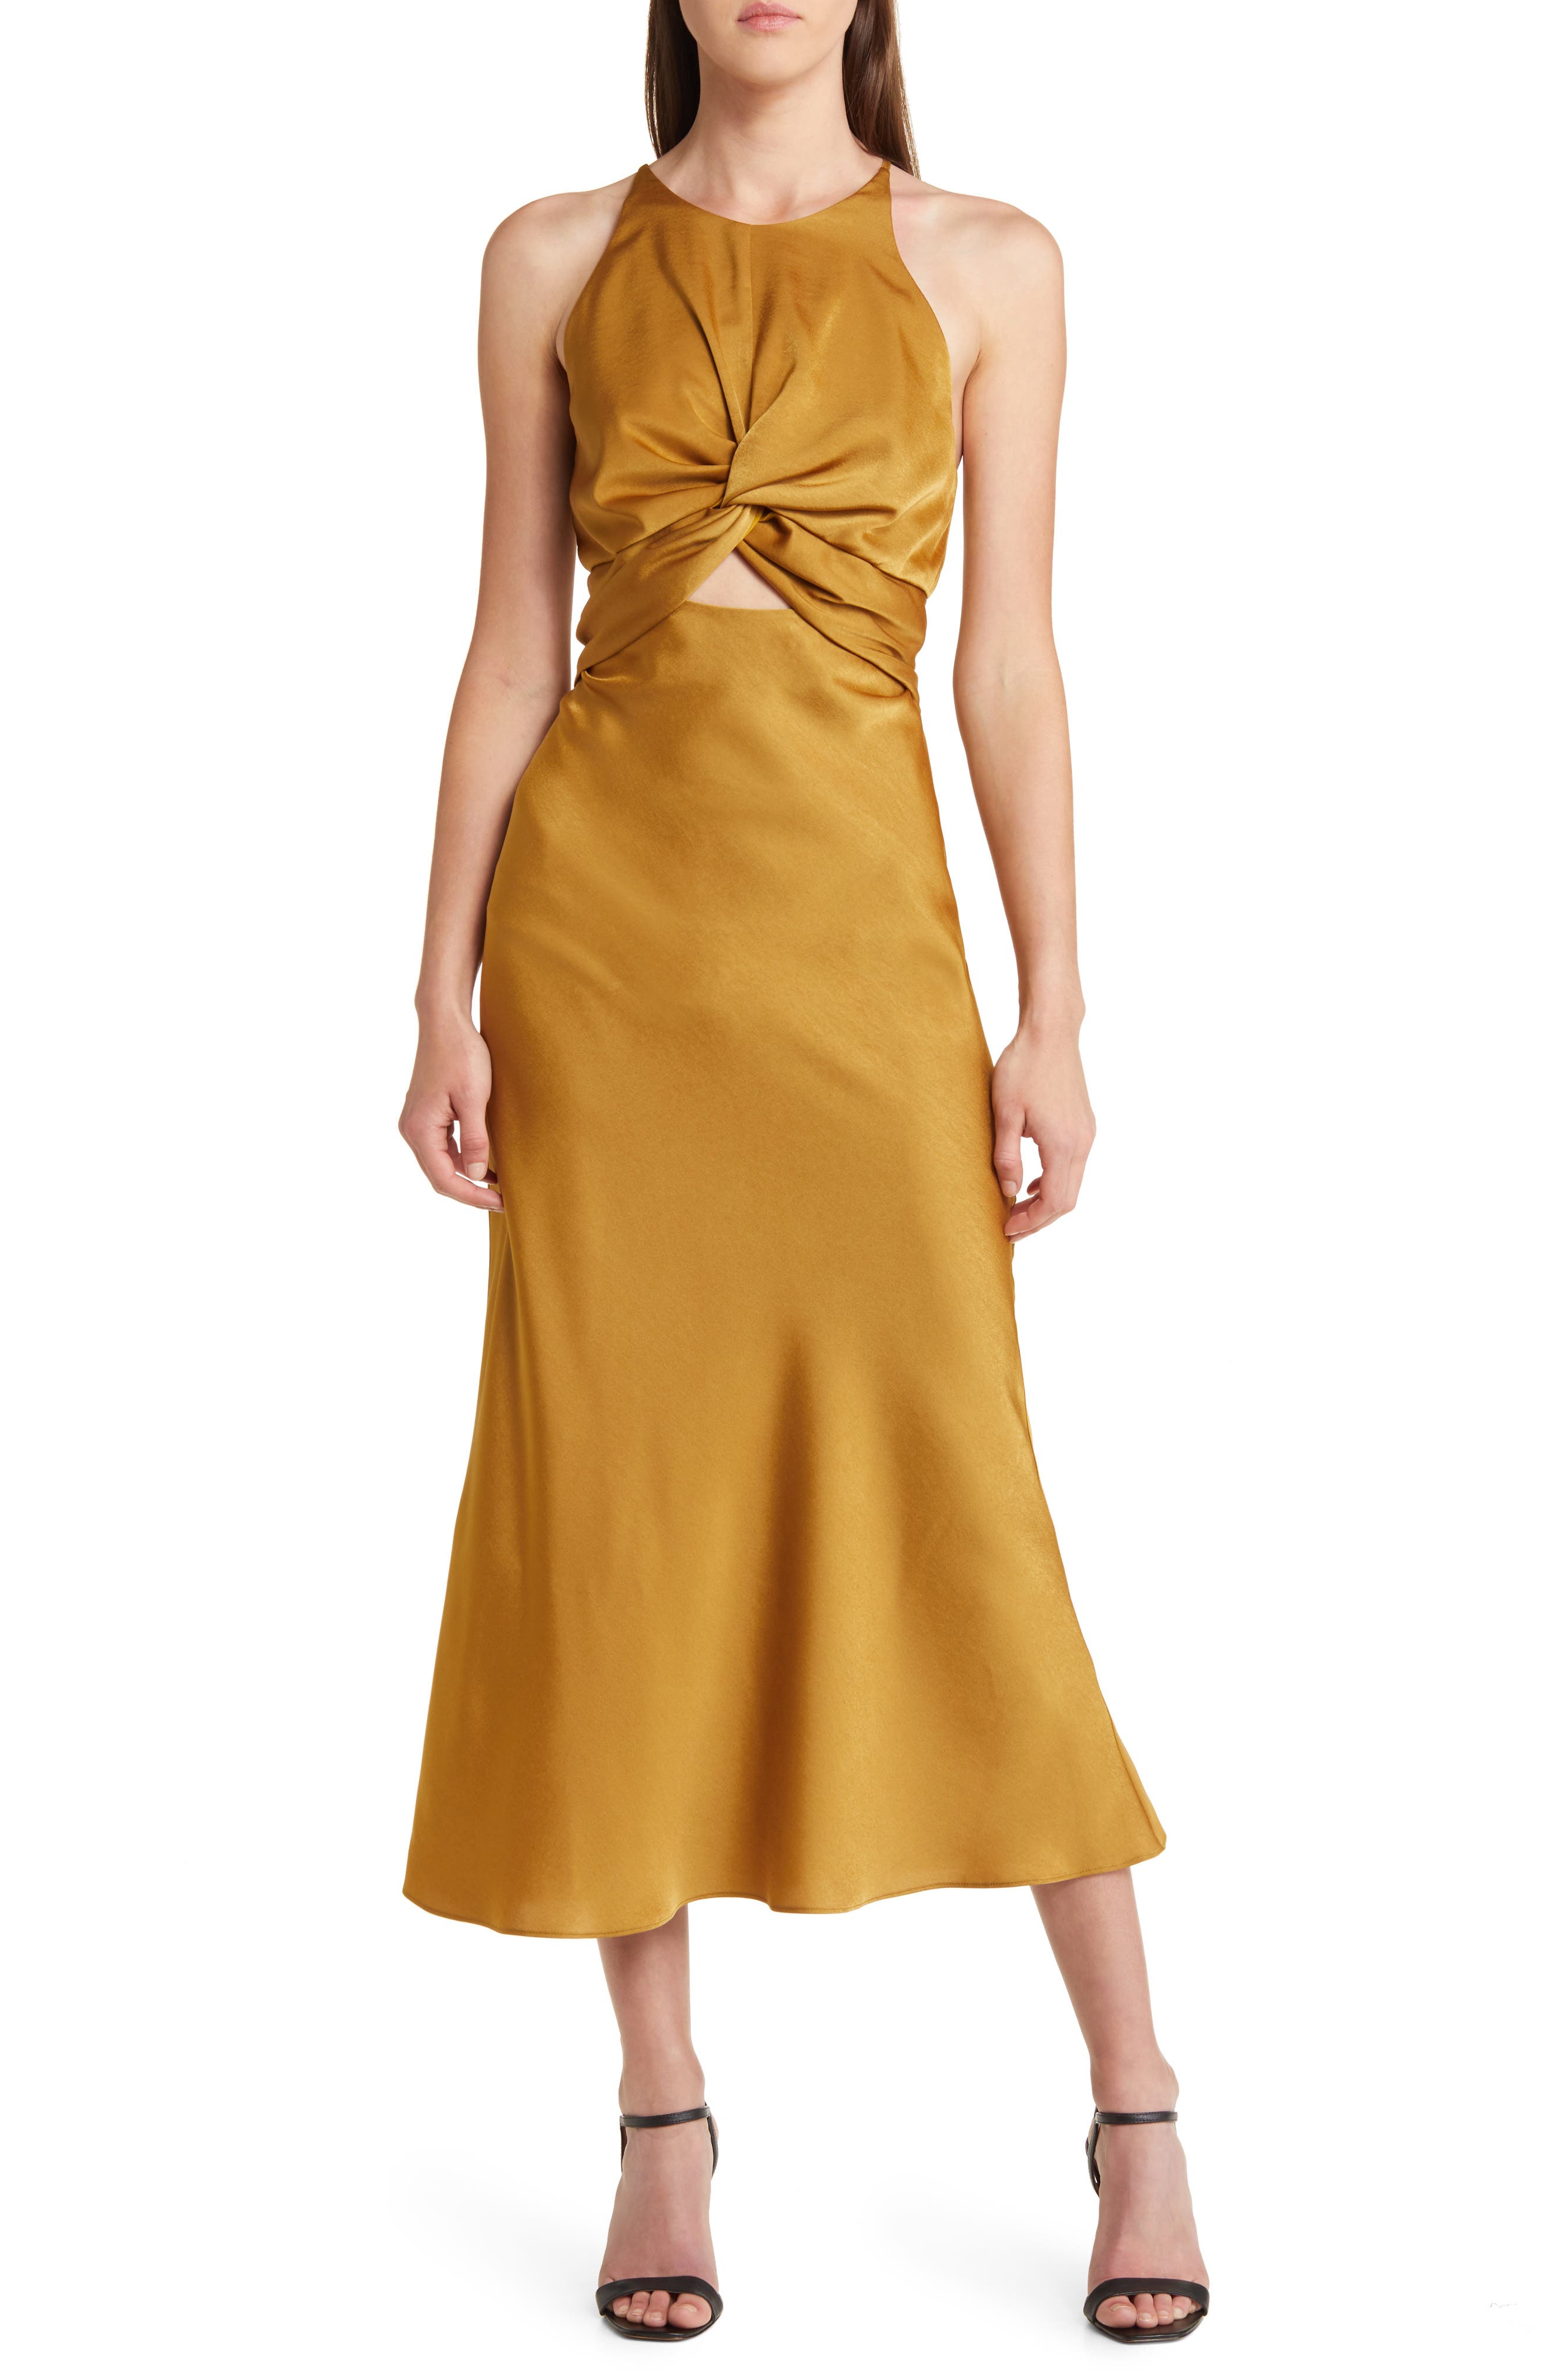 mustard dress